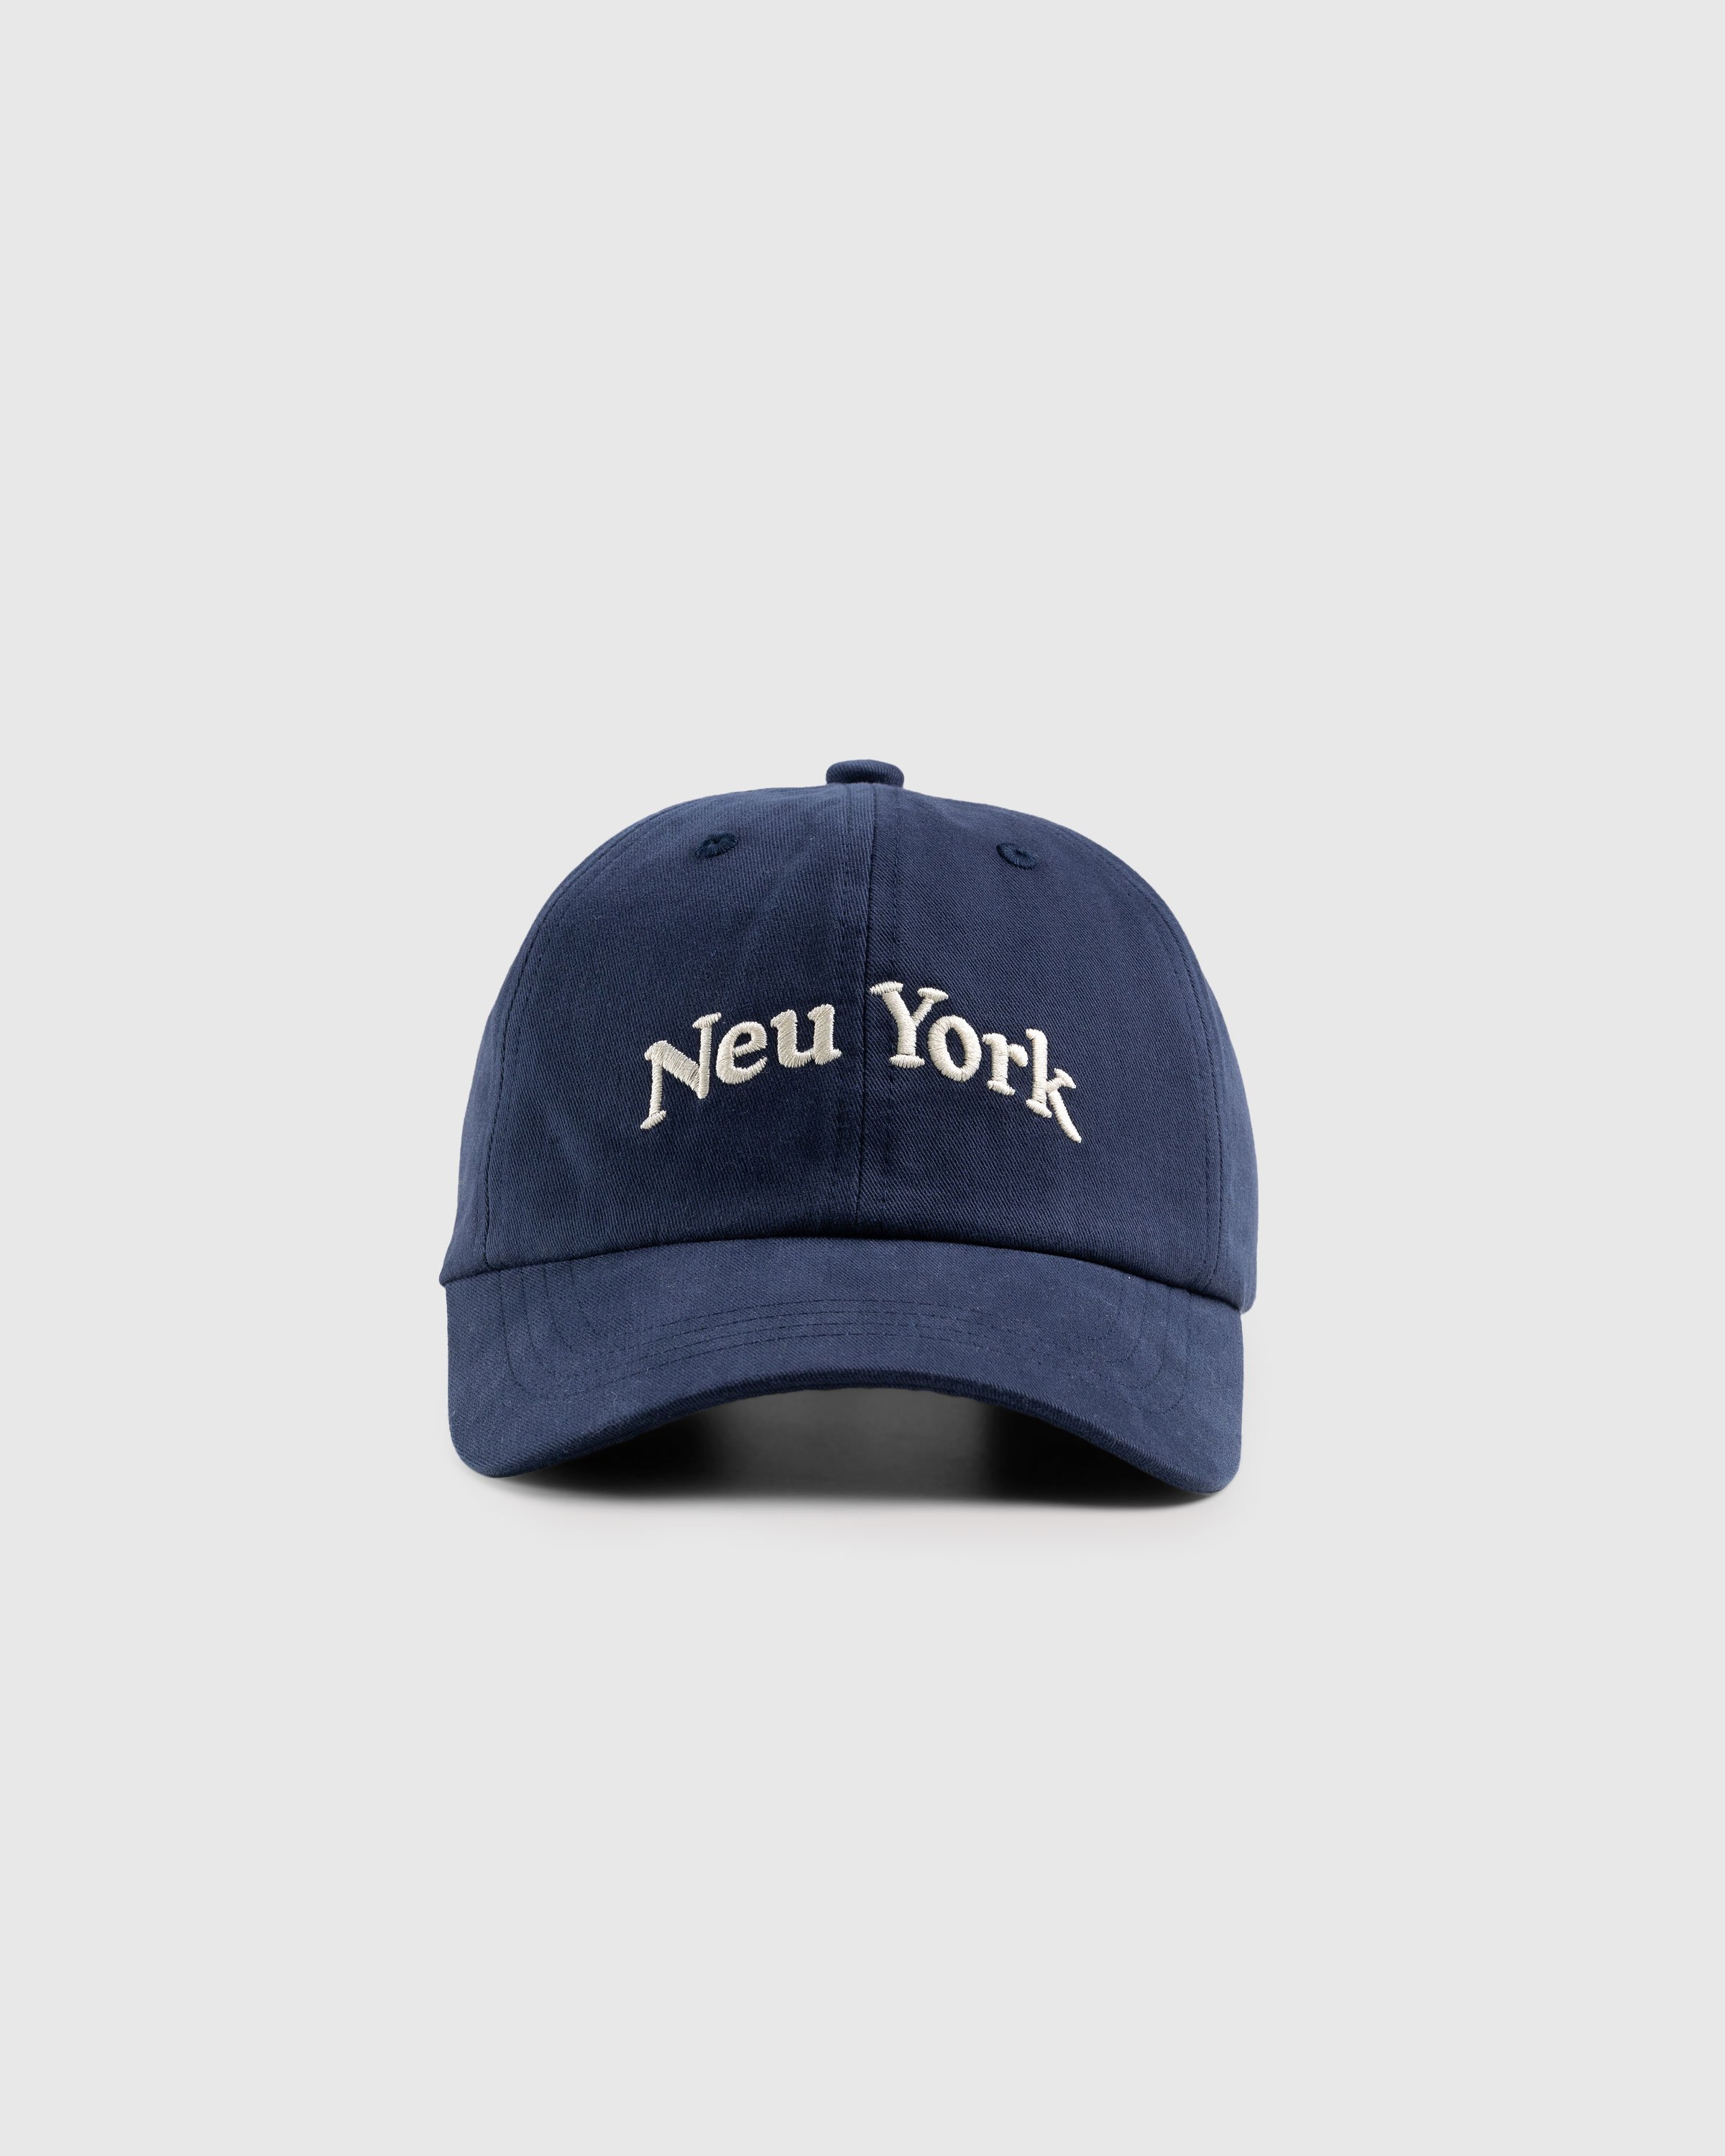 Highsnobiety - Neu York Navy Ball Cap - Accessories - Blue - Image 2